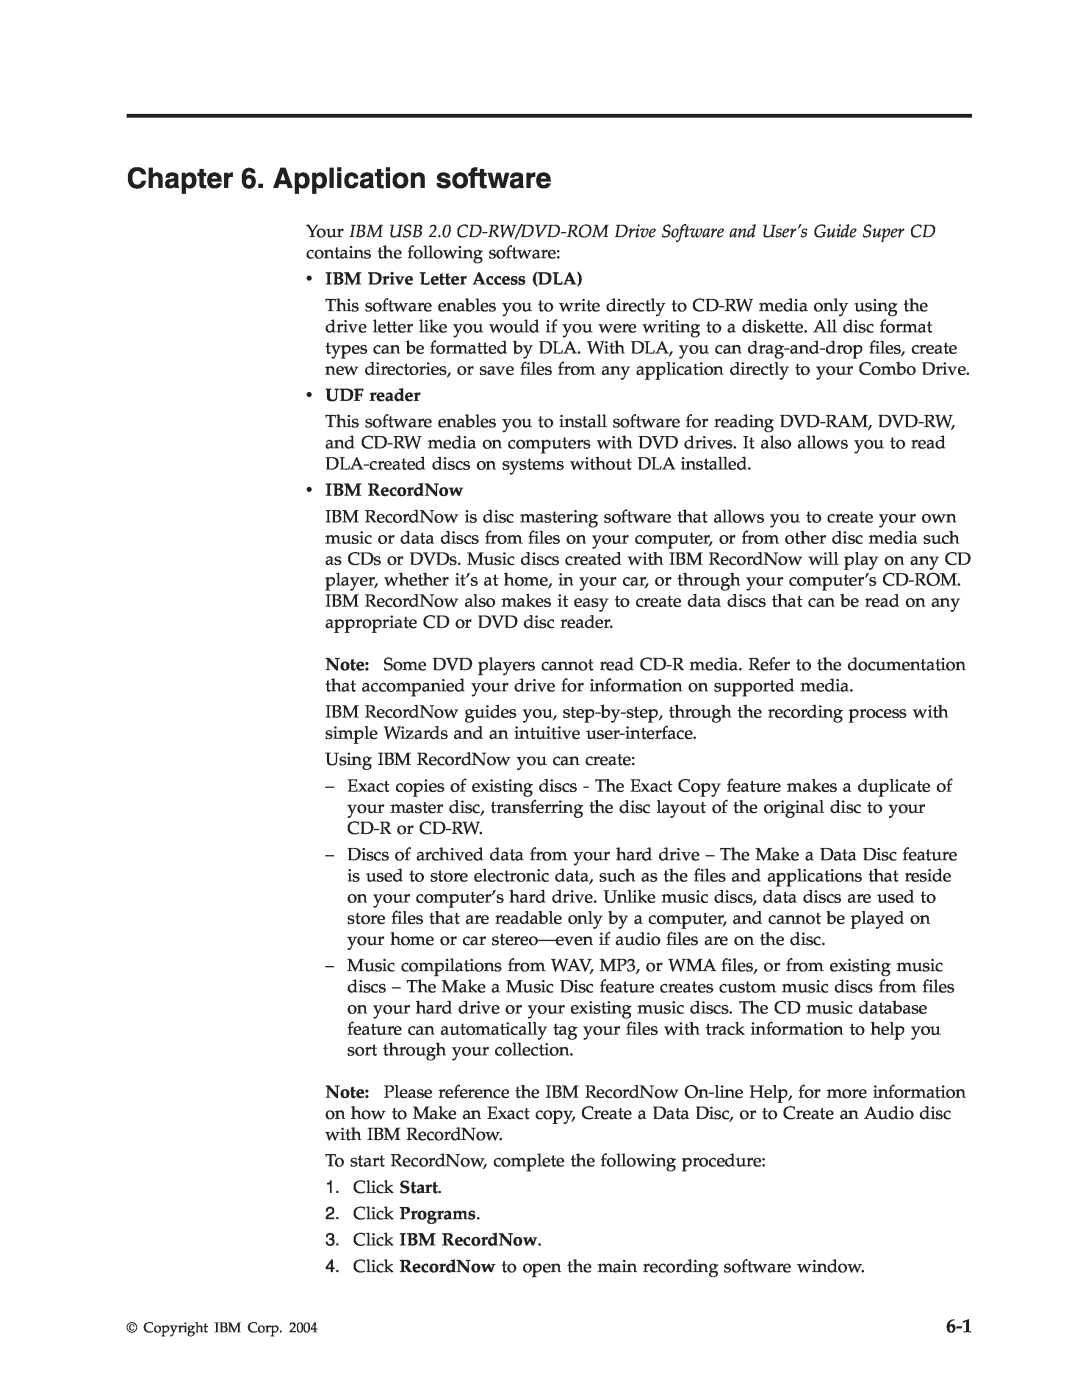 IBM 73P4518 manual Application software, v IBM Drive Letter Access DLA, v UDF reader, v IBM RecordNow 